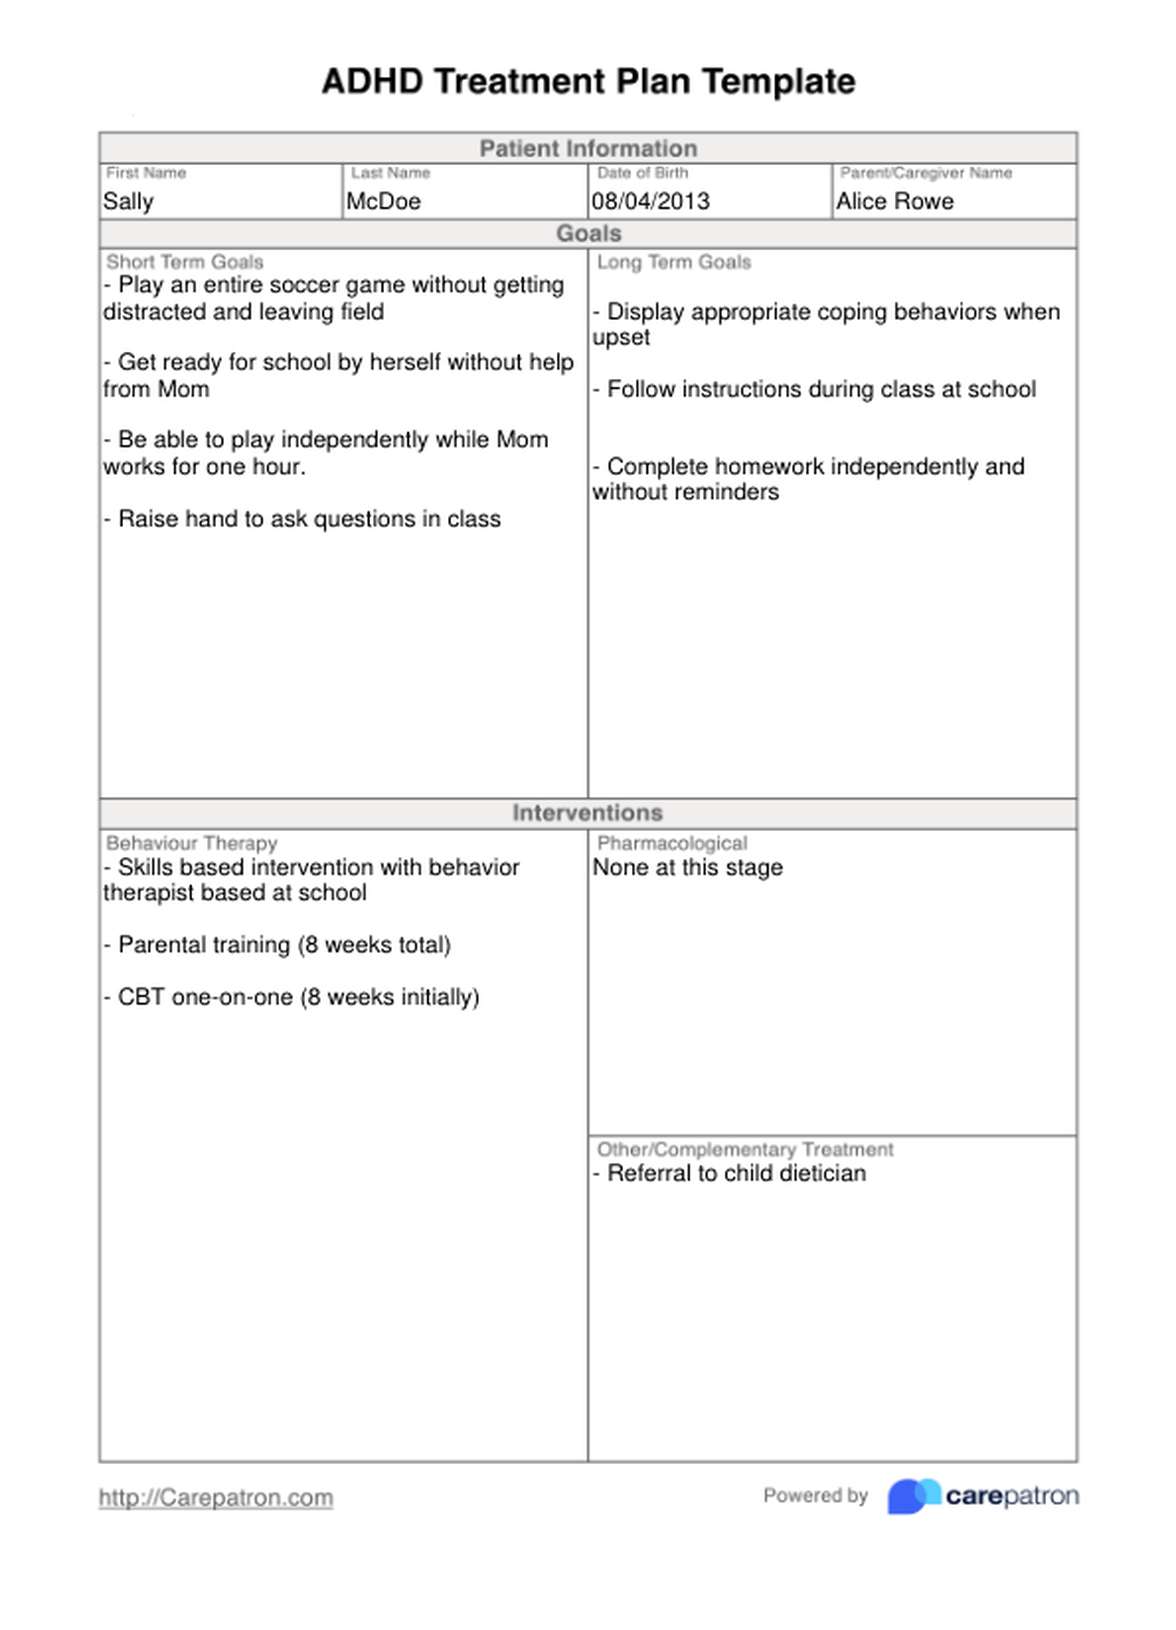 ADHD Treatment Plan Template PDF Example